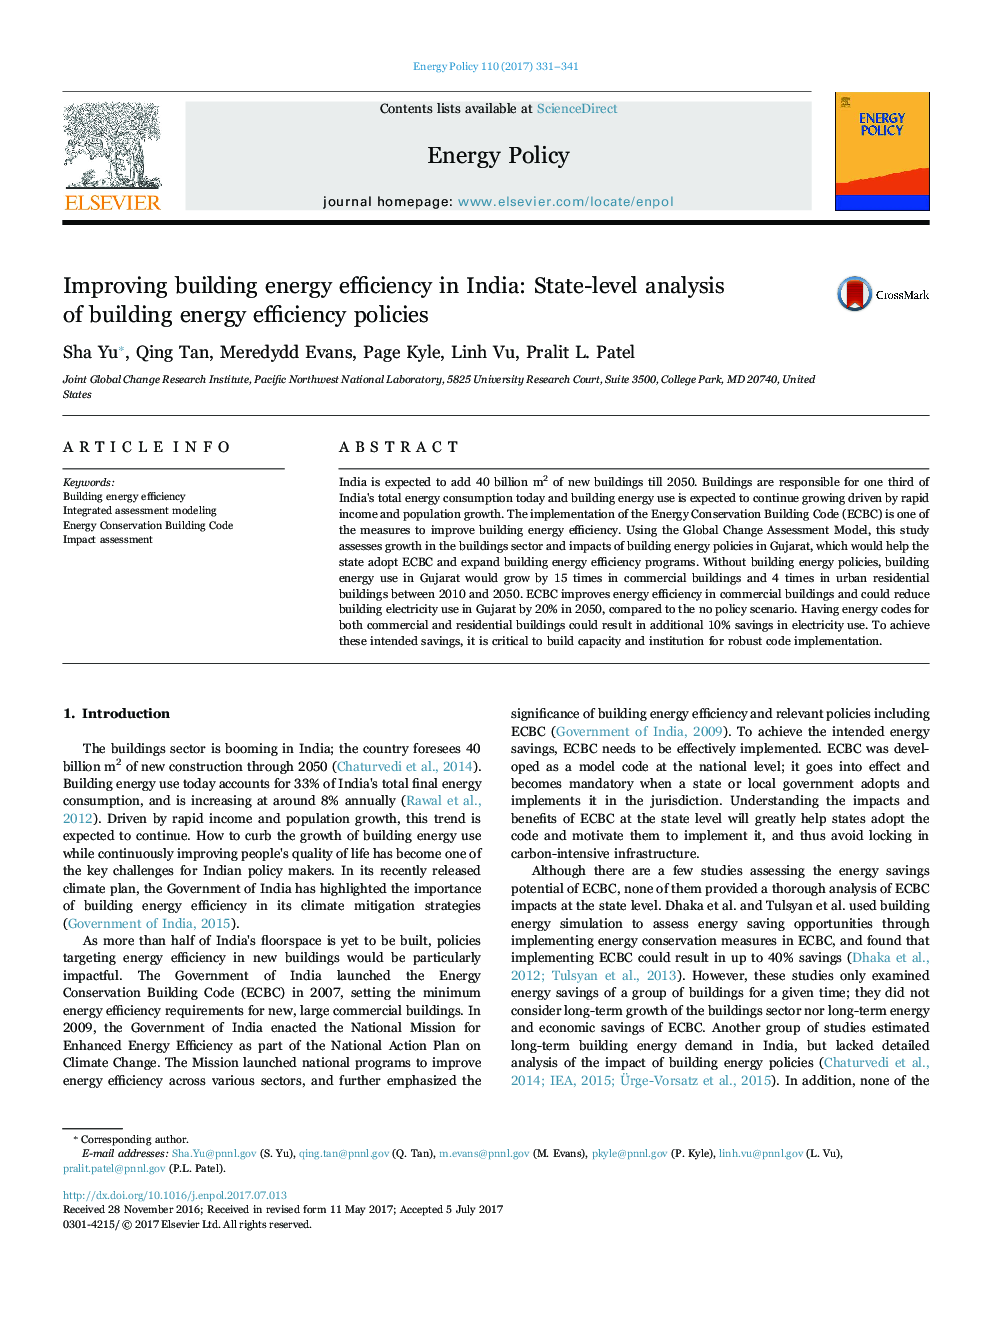 Improving building energy efficiency in India: State-level analysis of building energy efficiency policies